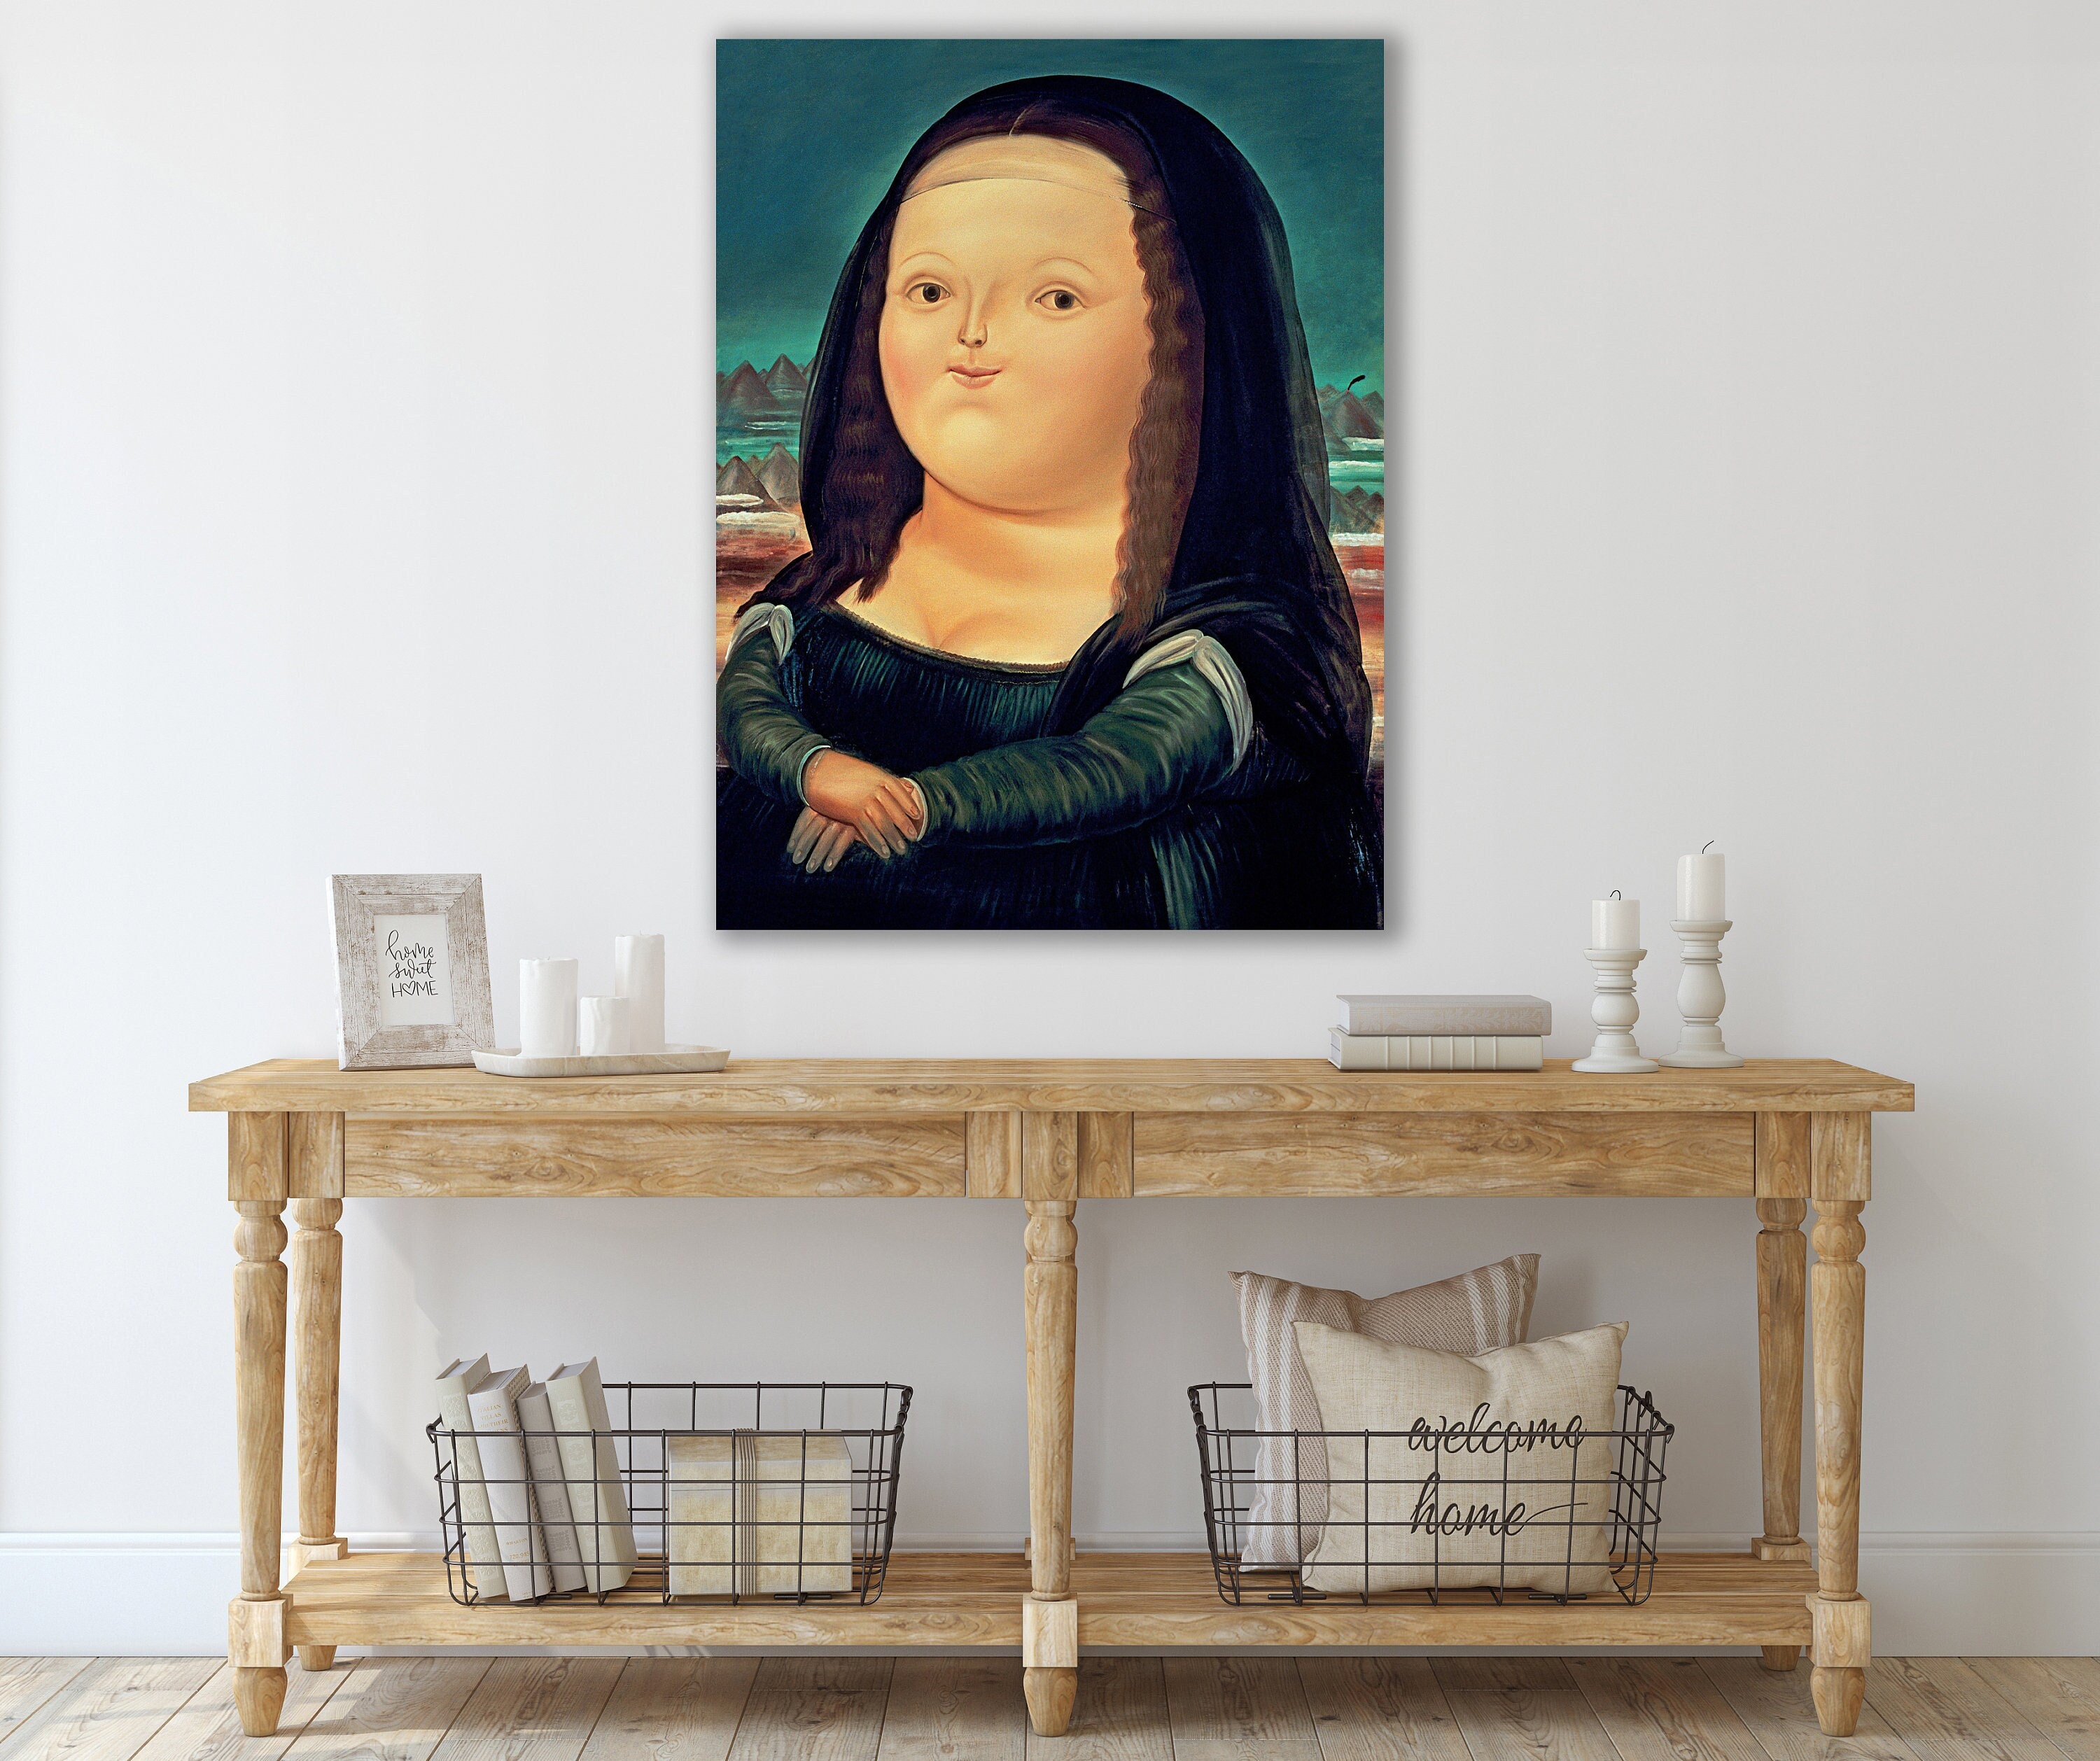 Fernando Botero's Mona Lisa – Everything you should know